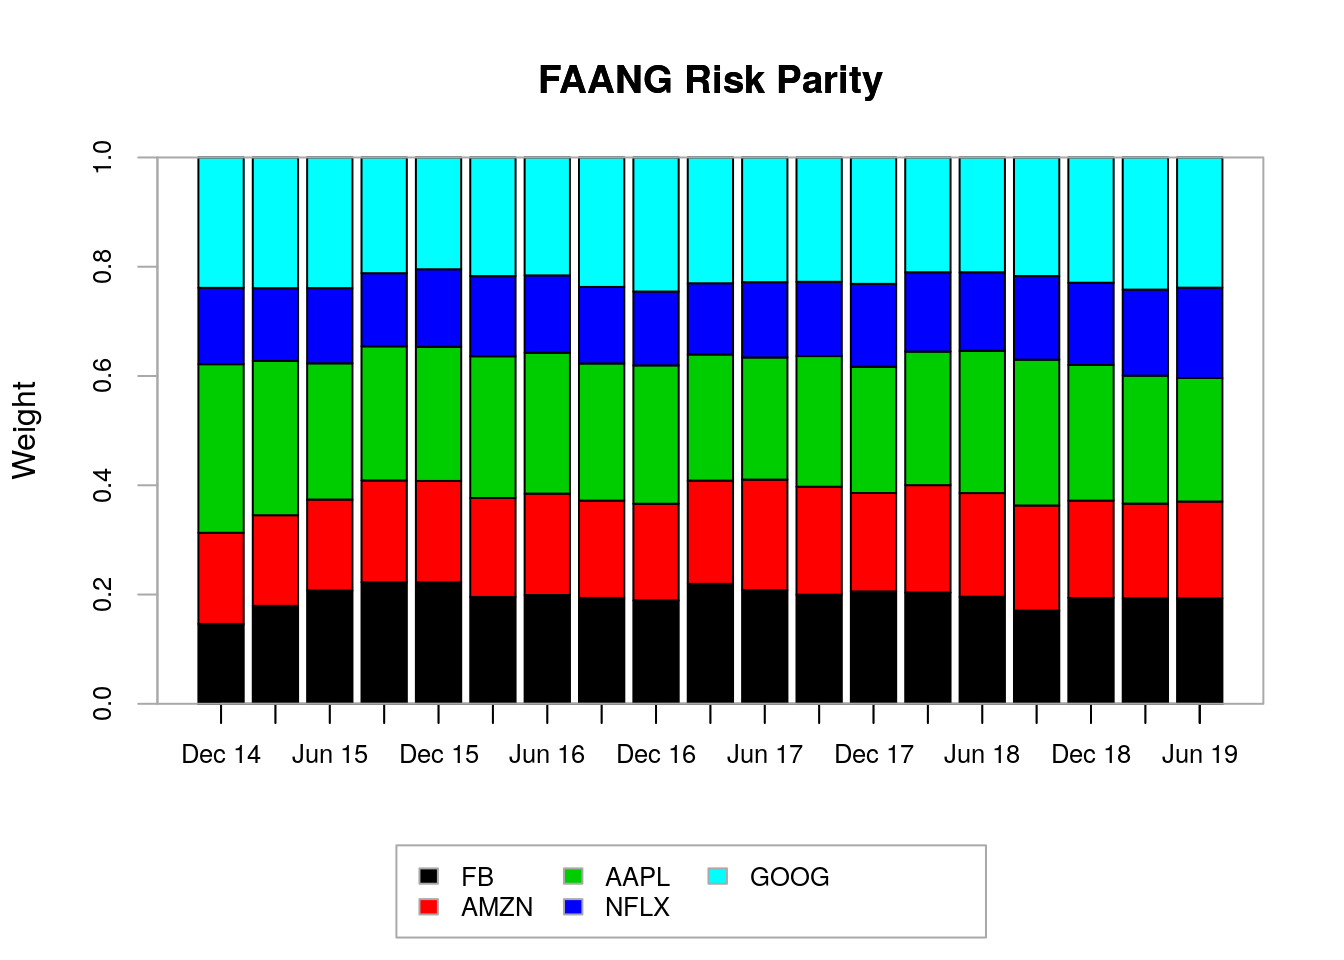 Portfolio weights for FAANG risk parity portfolios.